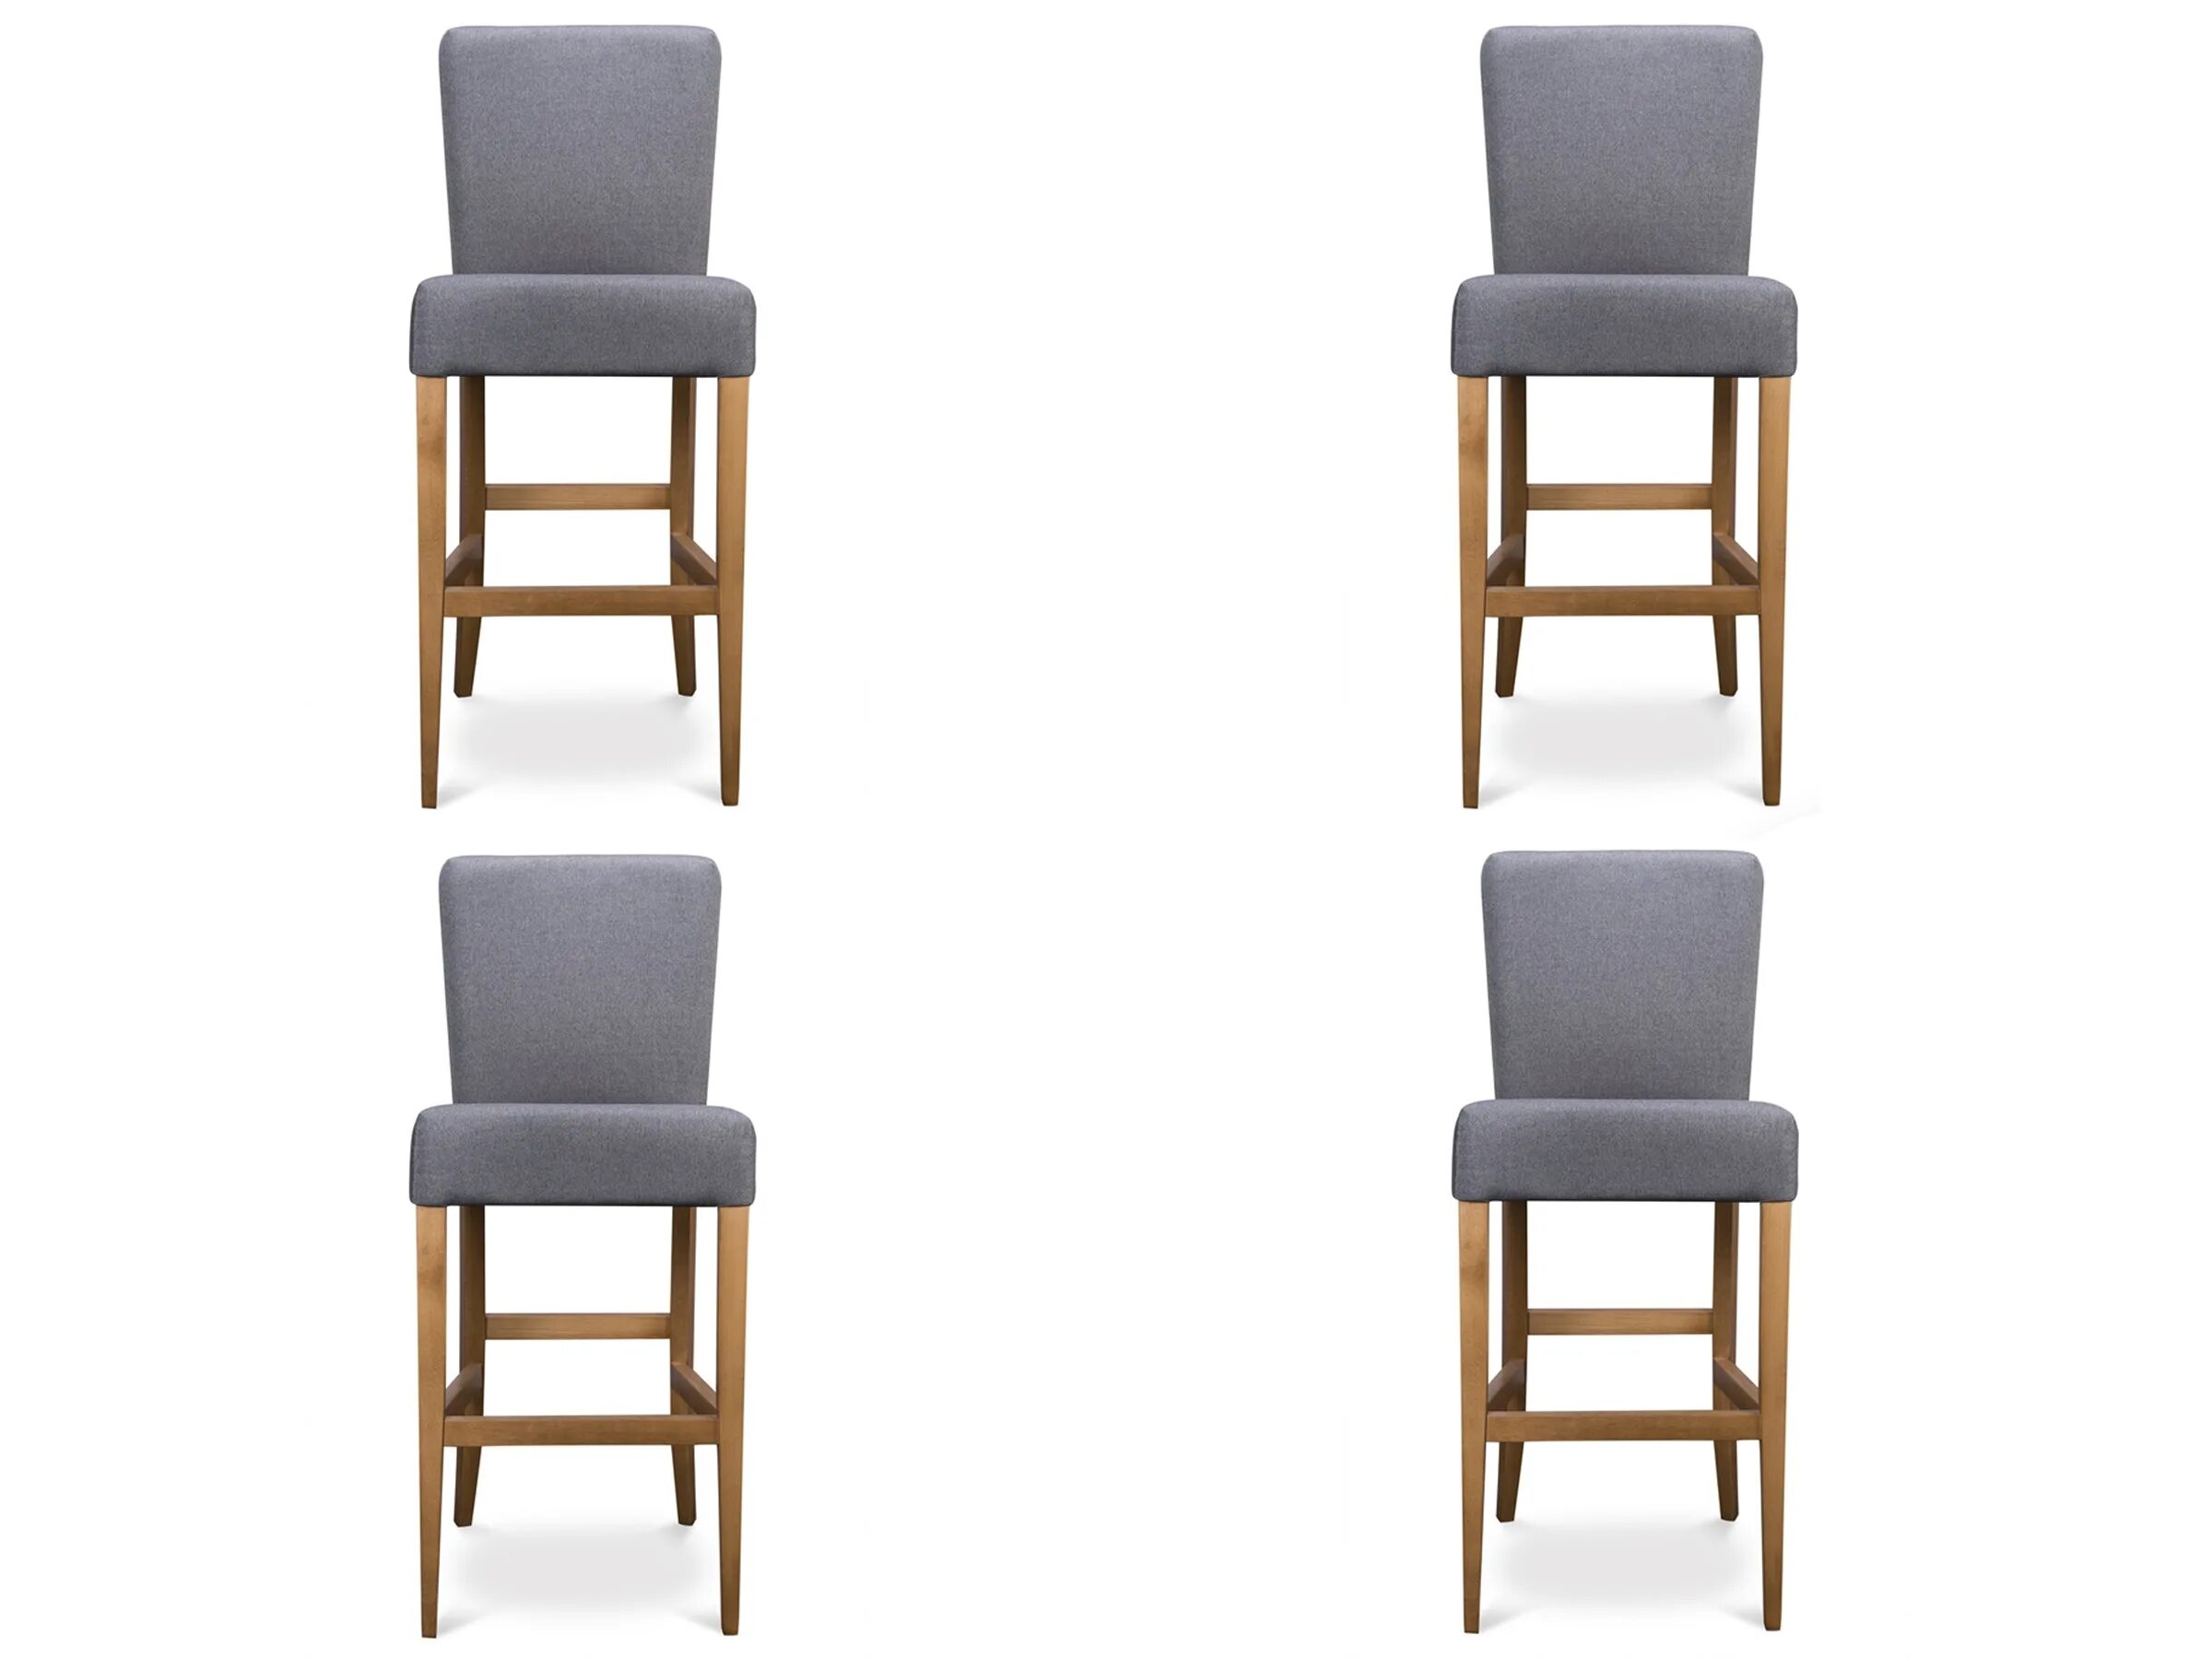 This is my chairs. Стул Монако 4sis. Набор из 4 стульев. Четвертый стул. Стулья для гостиниц классика.